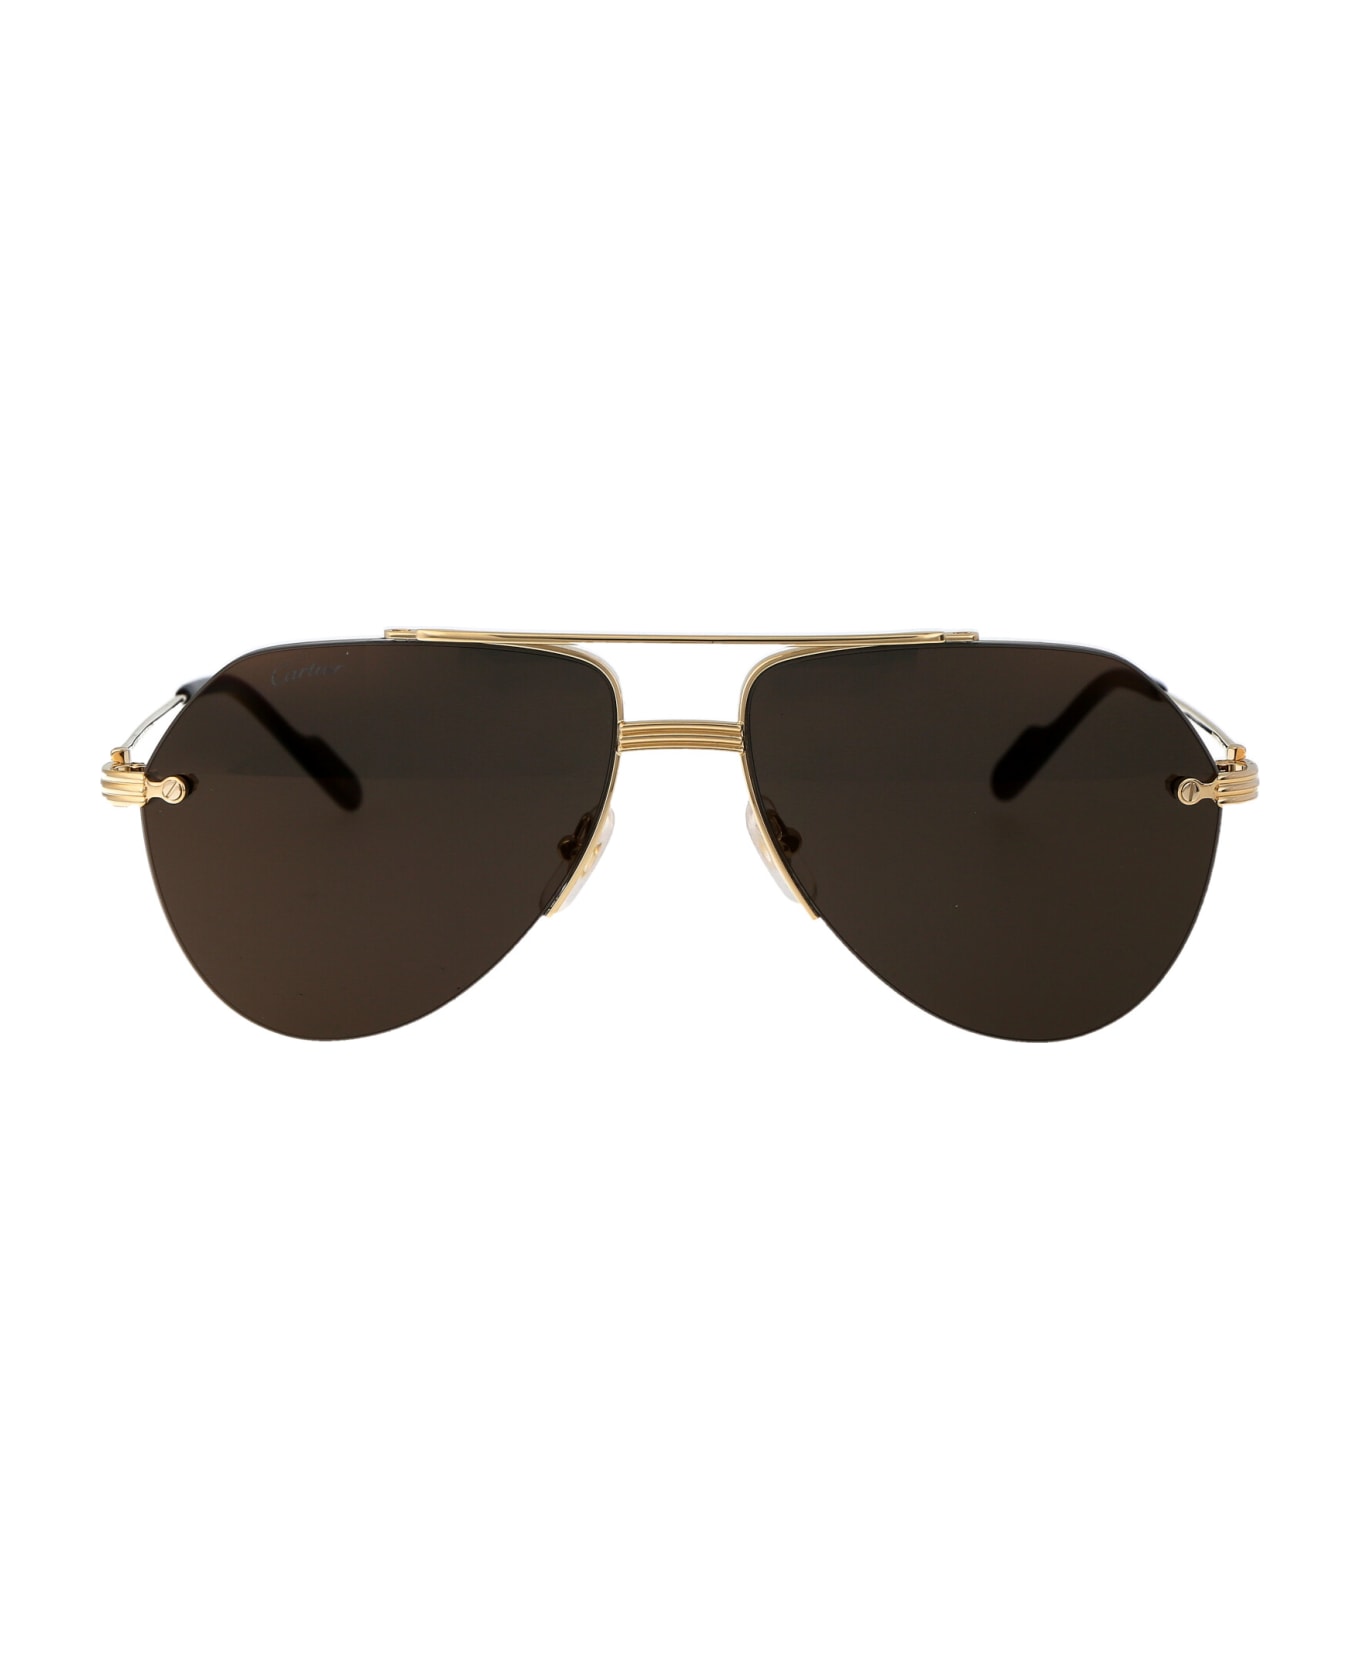 Cartier Eyewear Ct0427s Sunglasses - 005 GOLD GOLD GREY